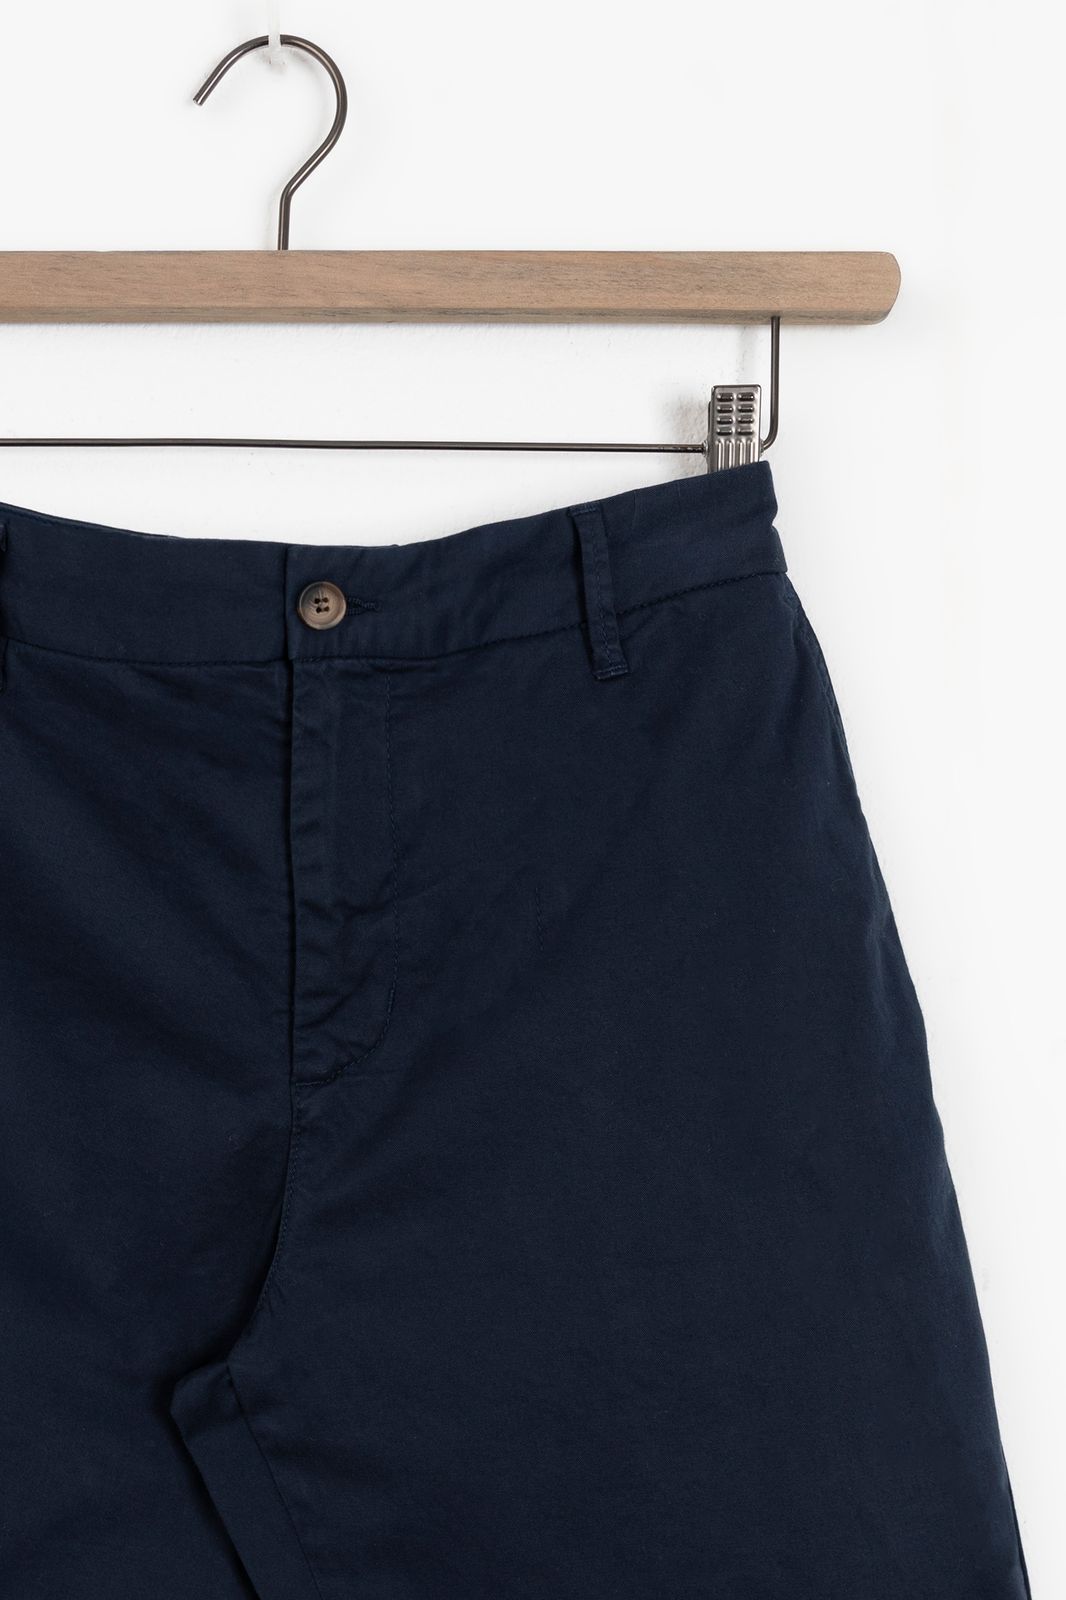 Chino-Shorts aus Baumwolle - dunkelblau